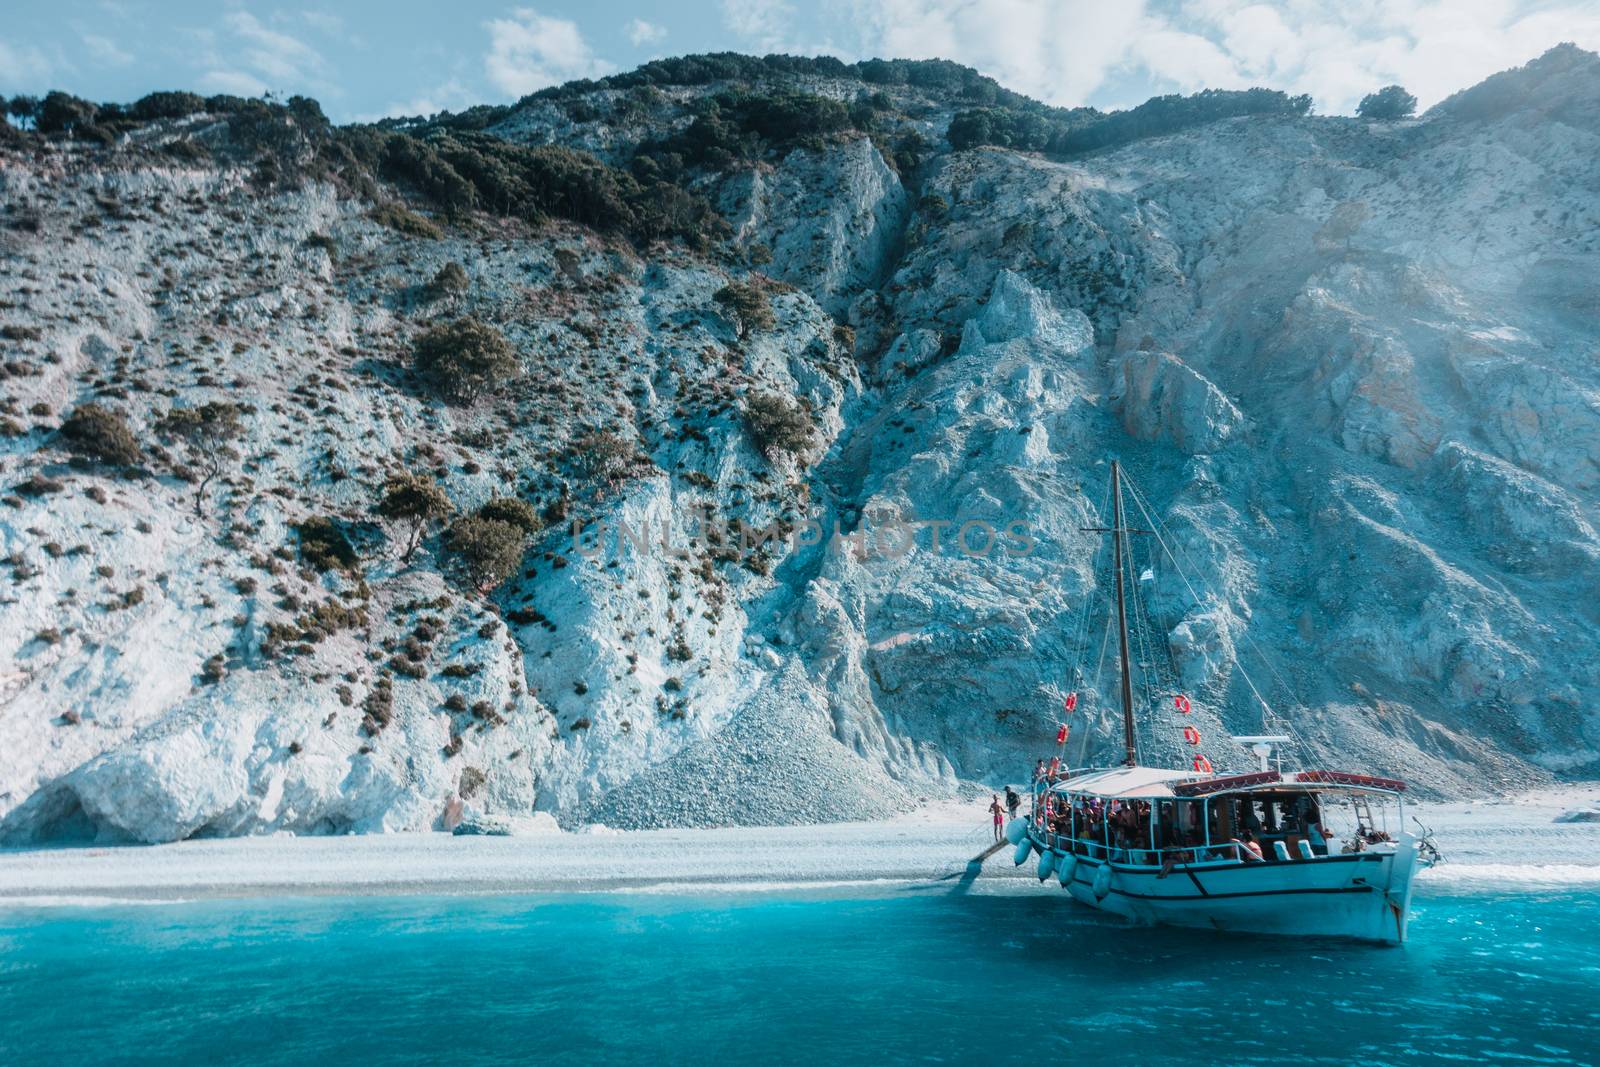 Skiathos Coast in Greece by samULvisuals